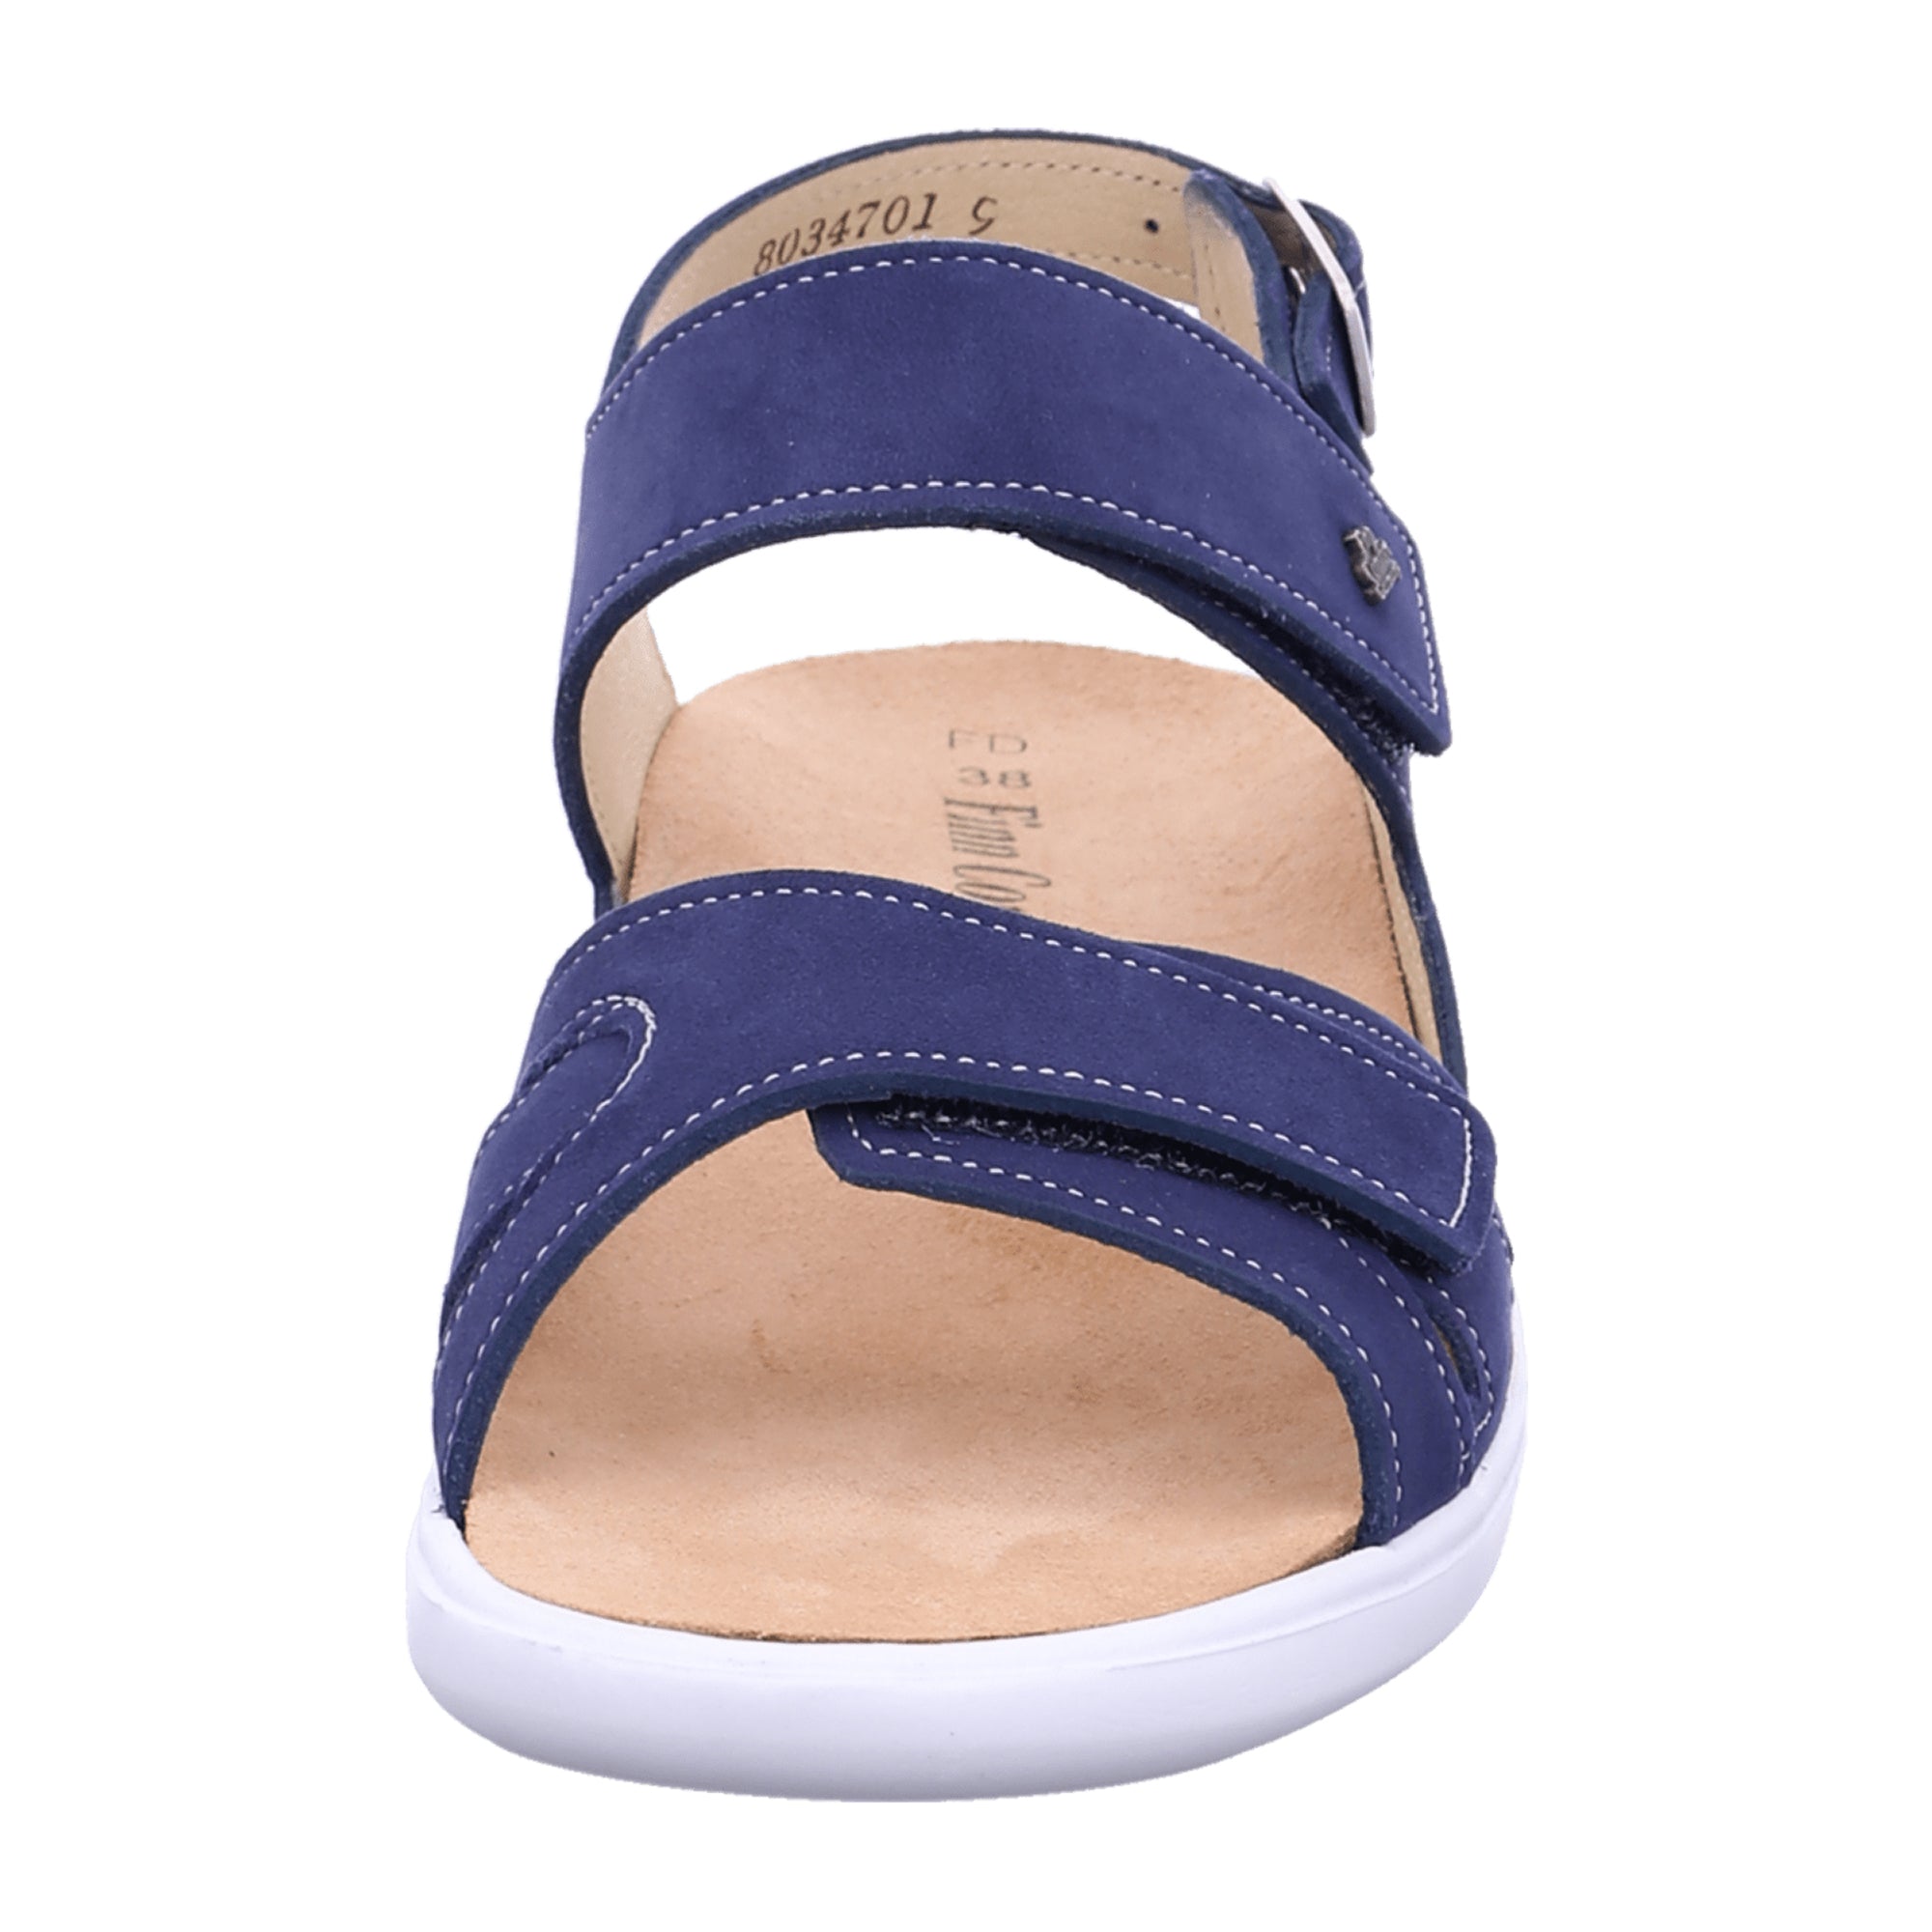 Finn Comfort Nadi Women's Comfortable Shoes - Stylish Blue, Durable Design - 03351-711047